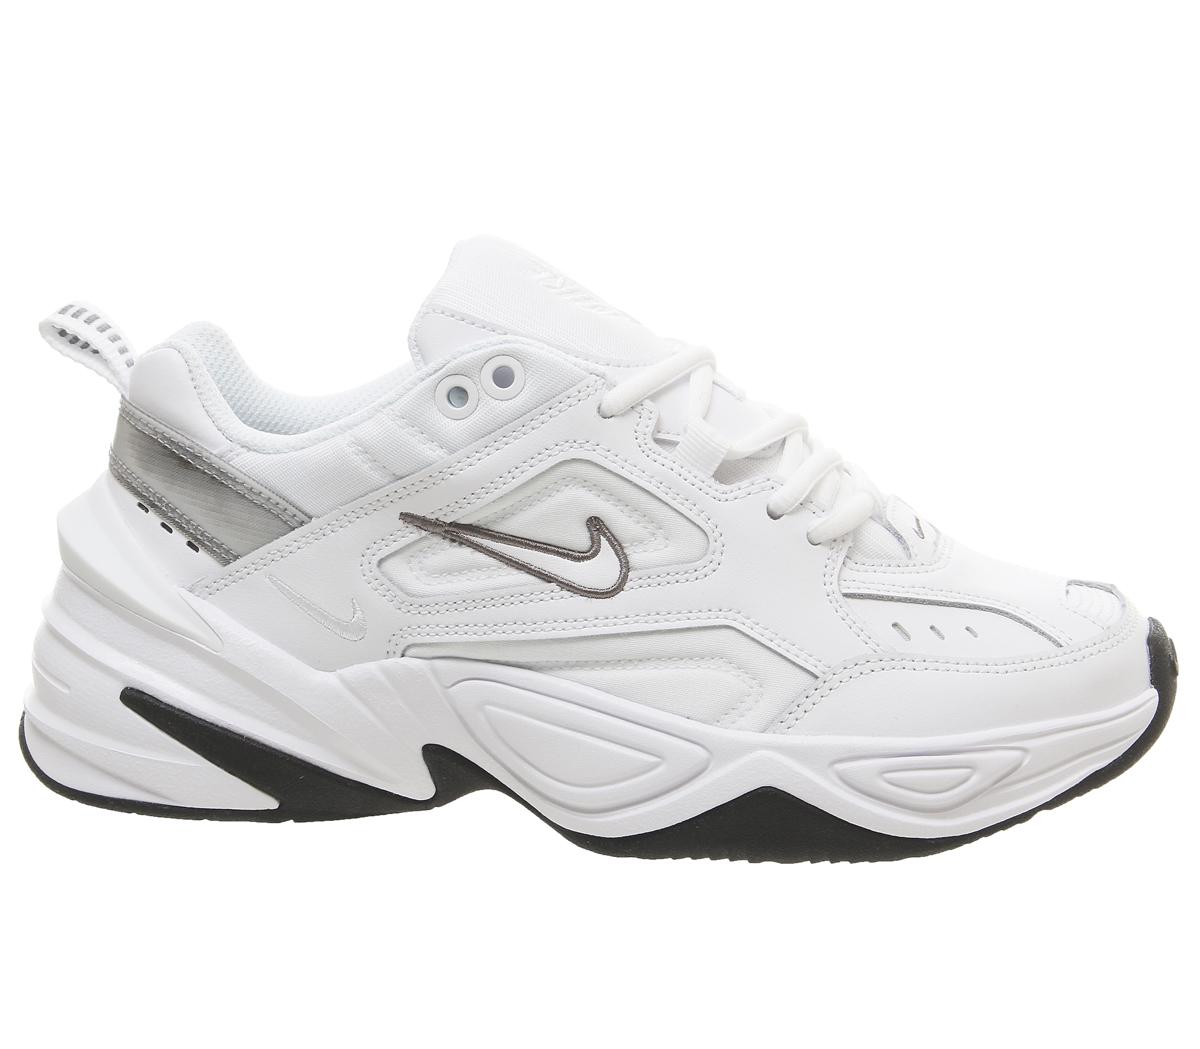  Nike M2k Tekno Trainers  White Cool Grey Black Sneaker damen